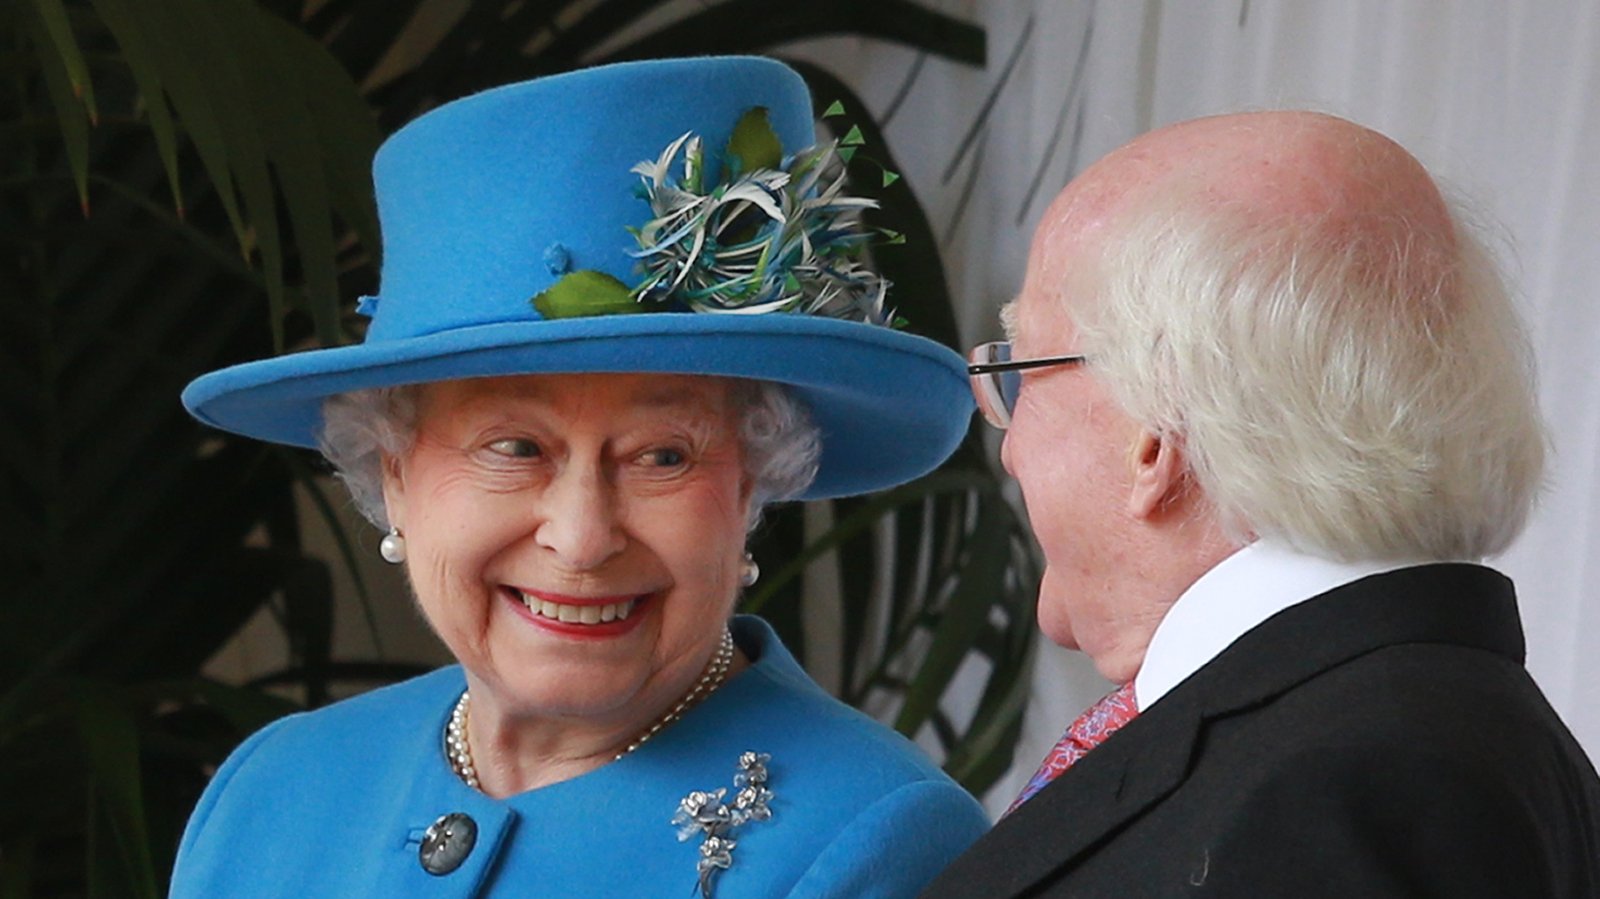 Image - Queen Elizabeth ll with President Higgins in April 2014